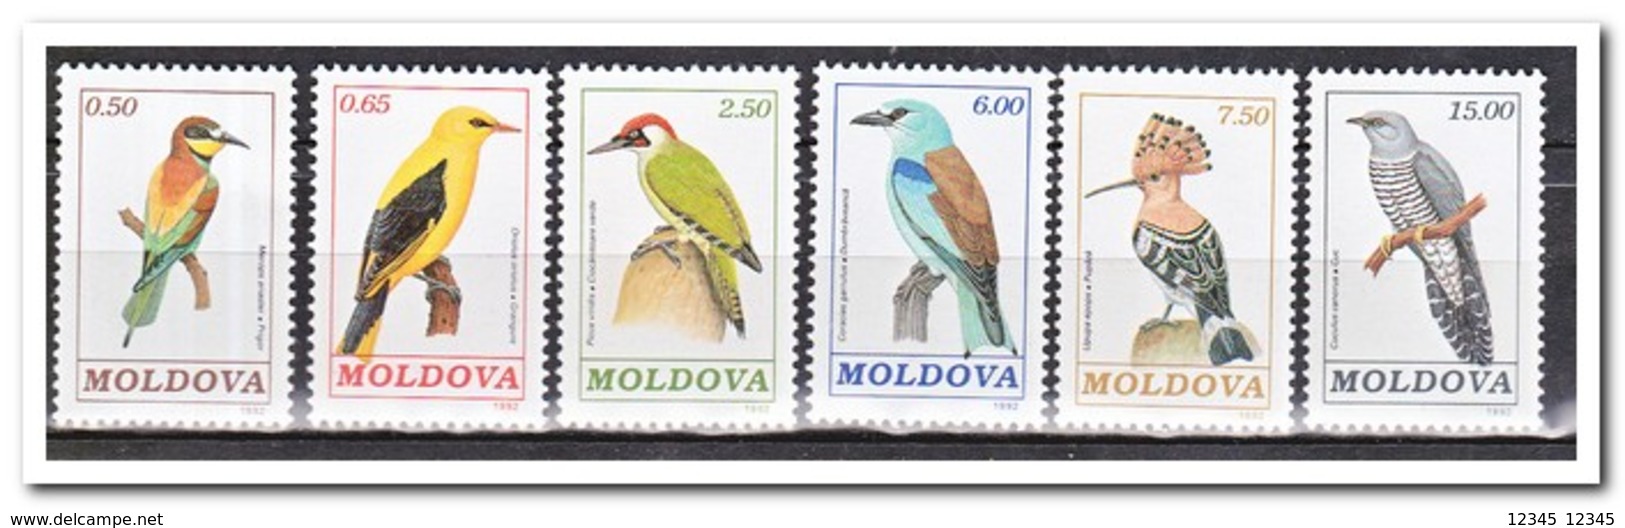 Moldavië 1992, Postfris MNH, Birds - Moldova